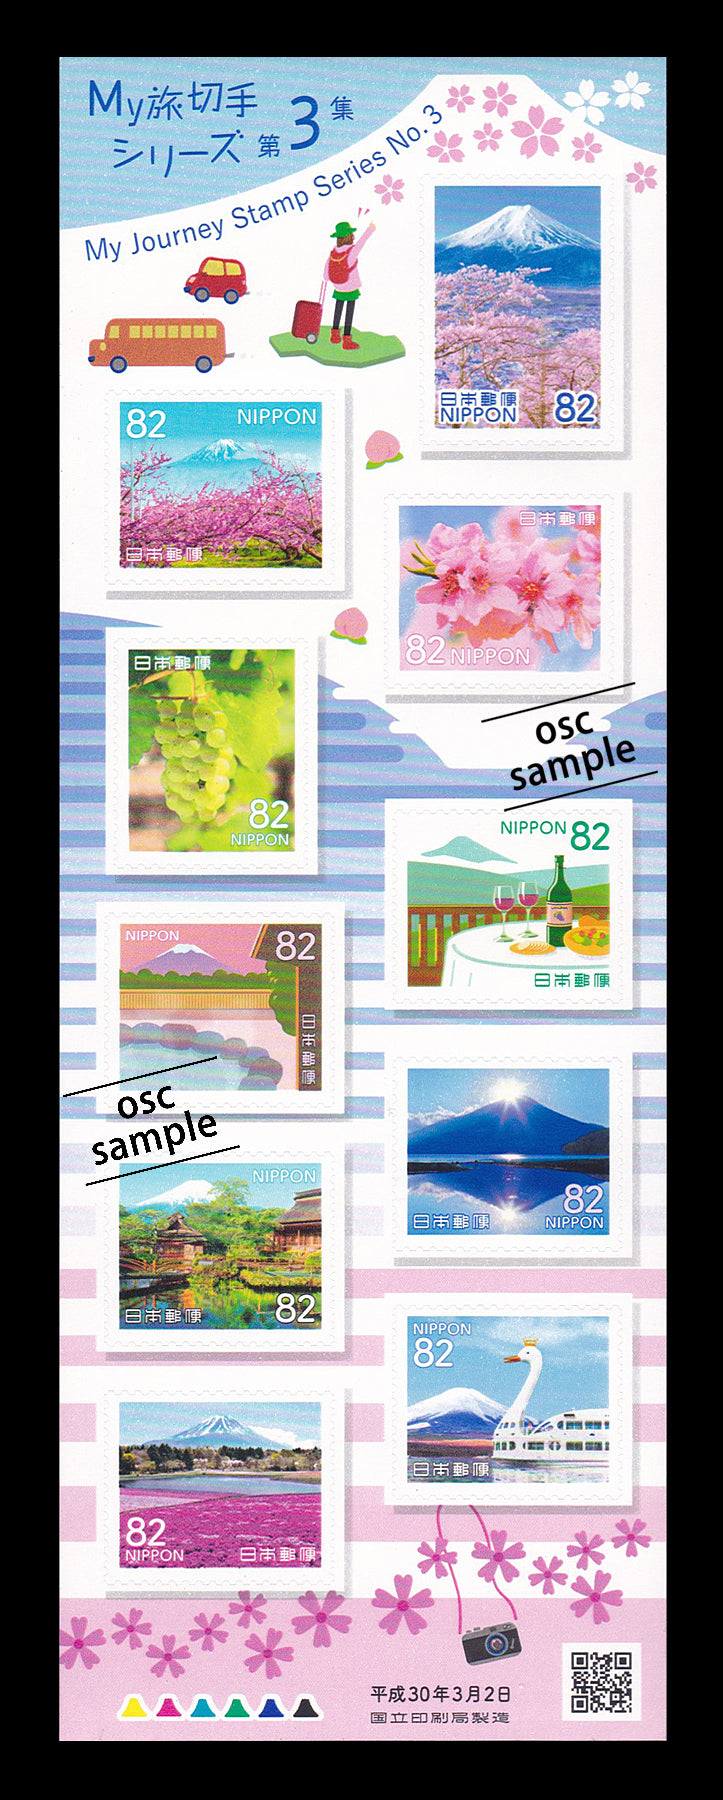 Hakone (My Journey Stamp Series No.3) 箱根 (82 yen)